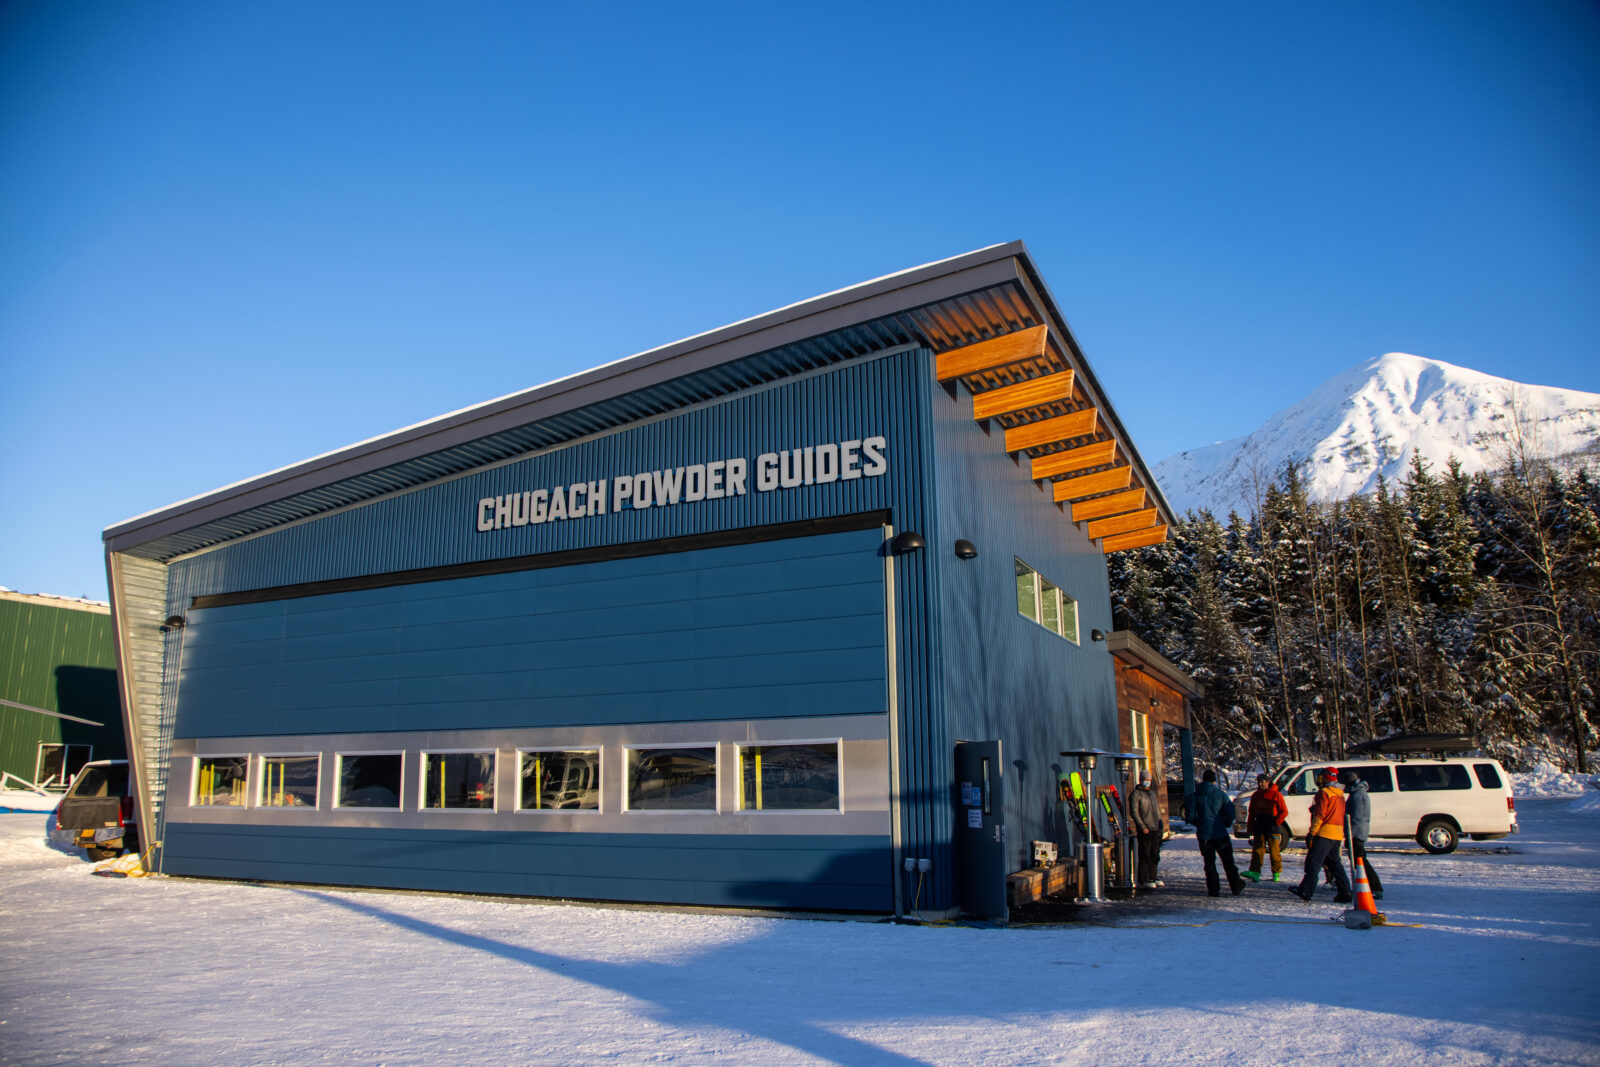 The Chugach Powder Guides hangar on a bluebird winter day.